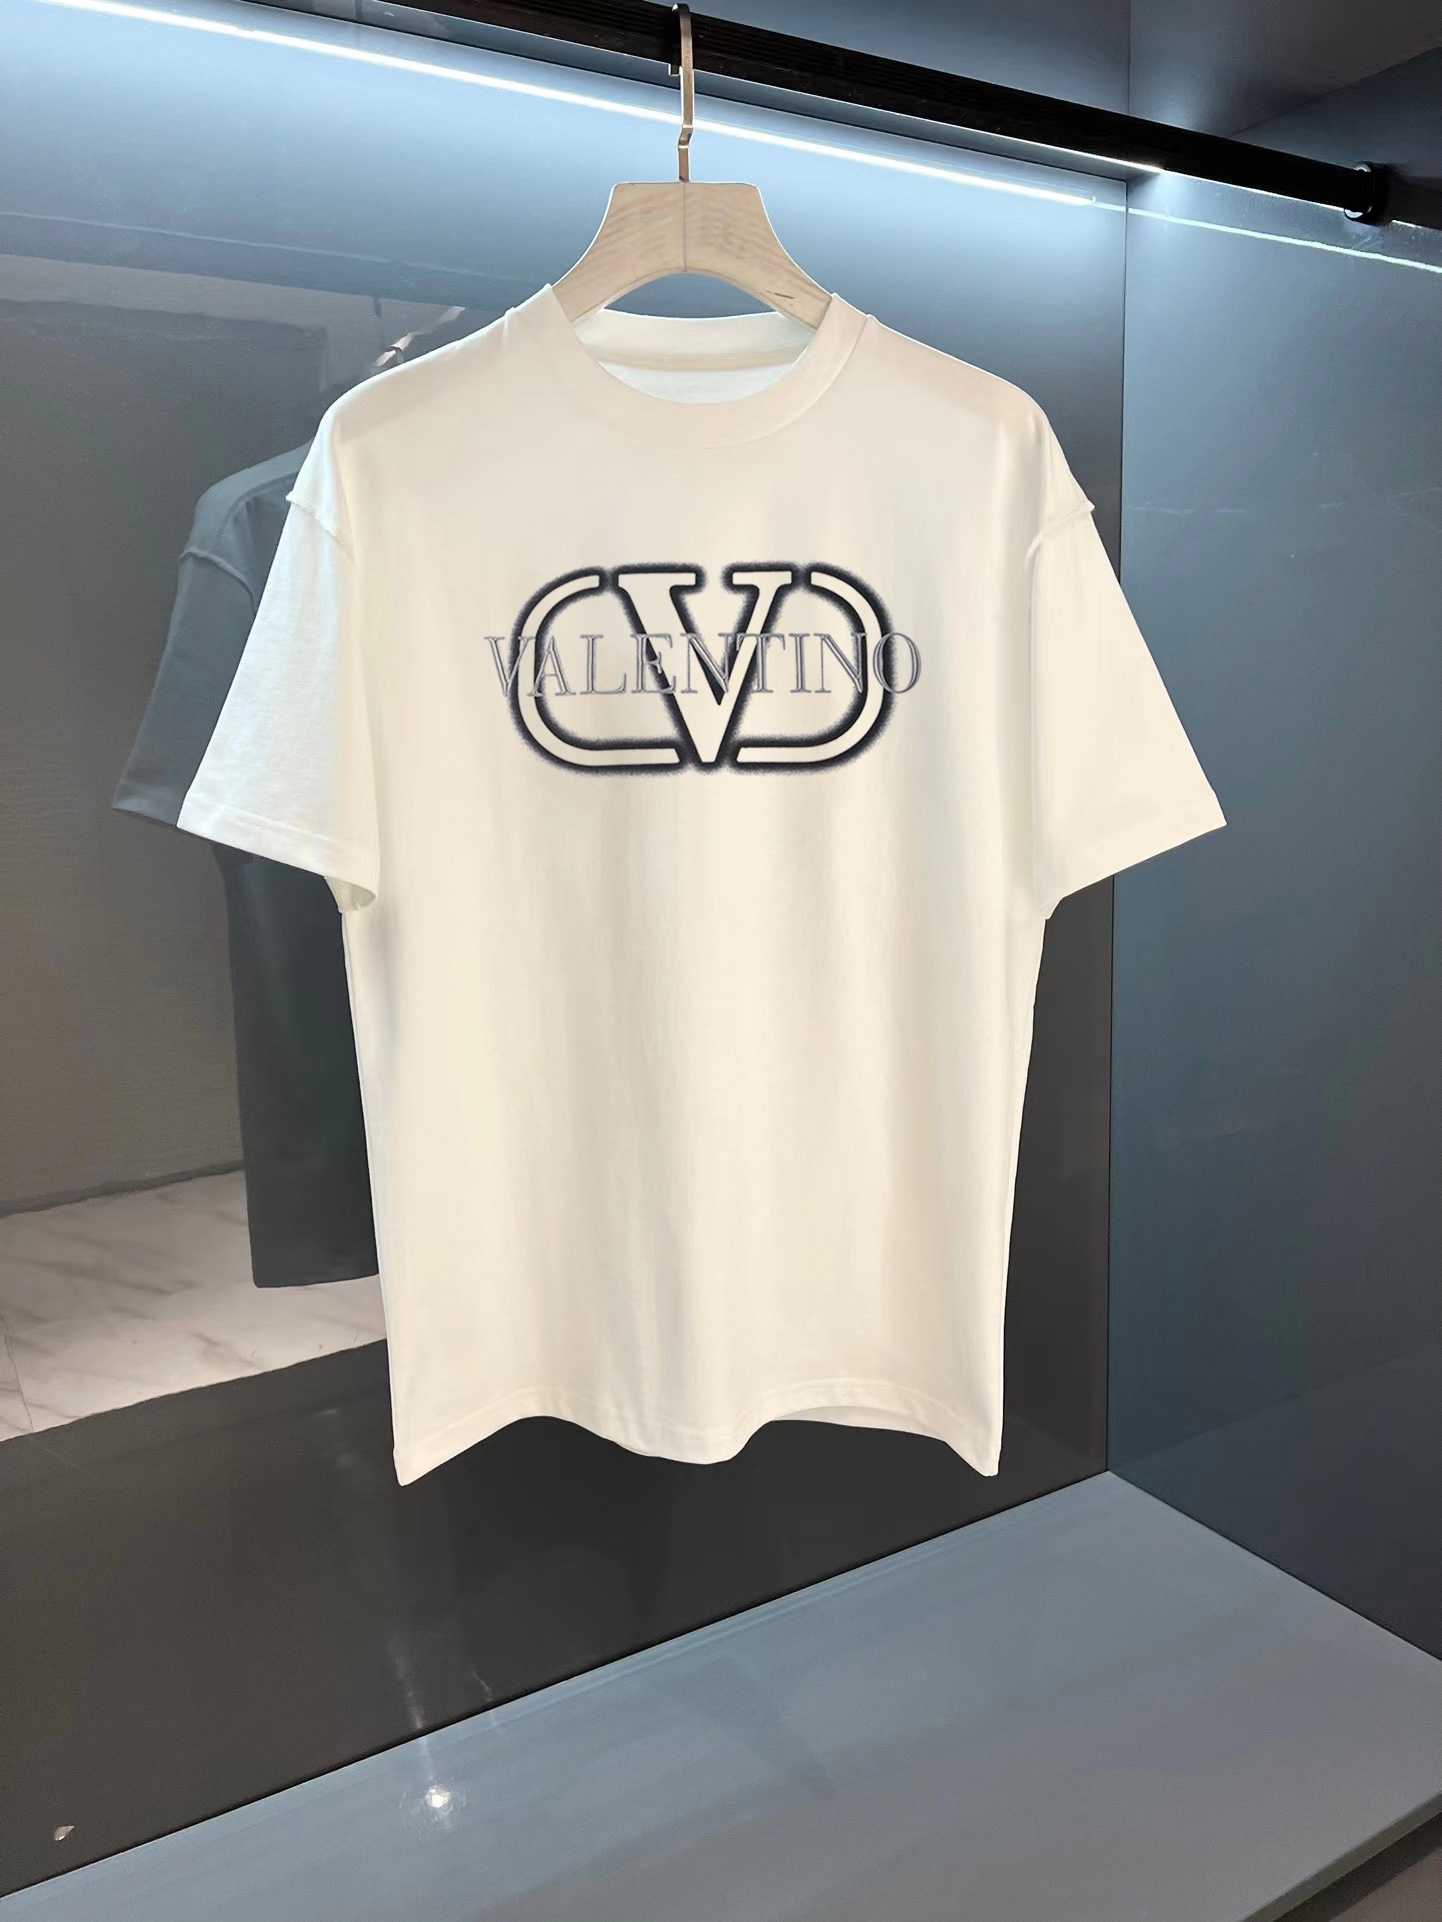 Valentino Clothing T-Shirt Black White Printing Cotton Short Sleeve